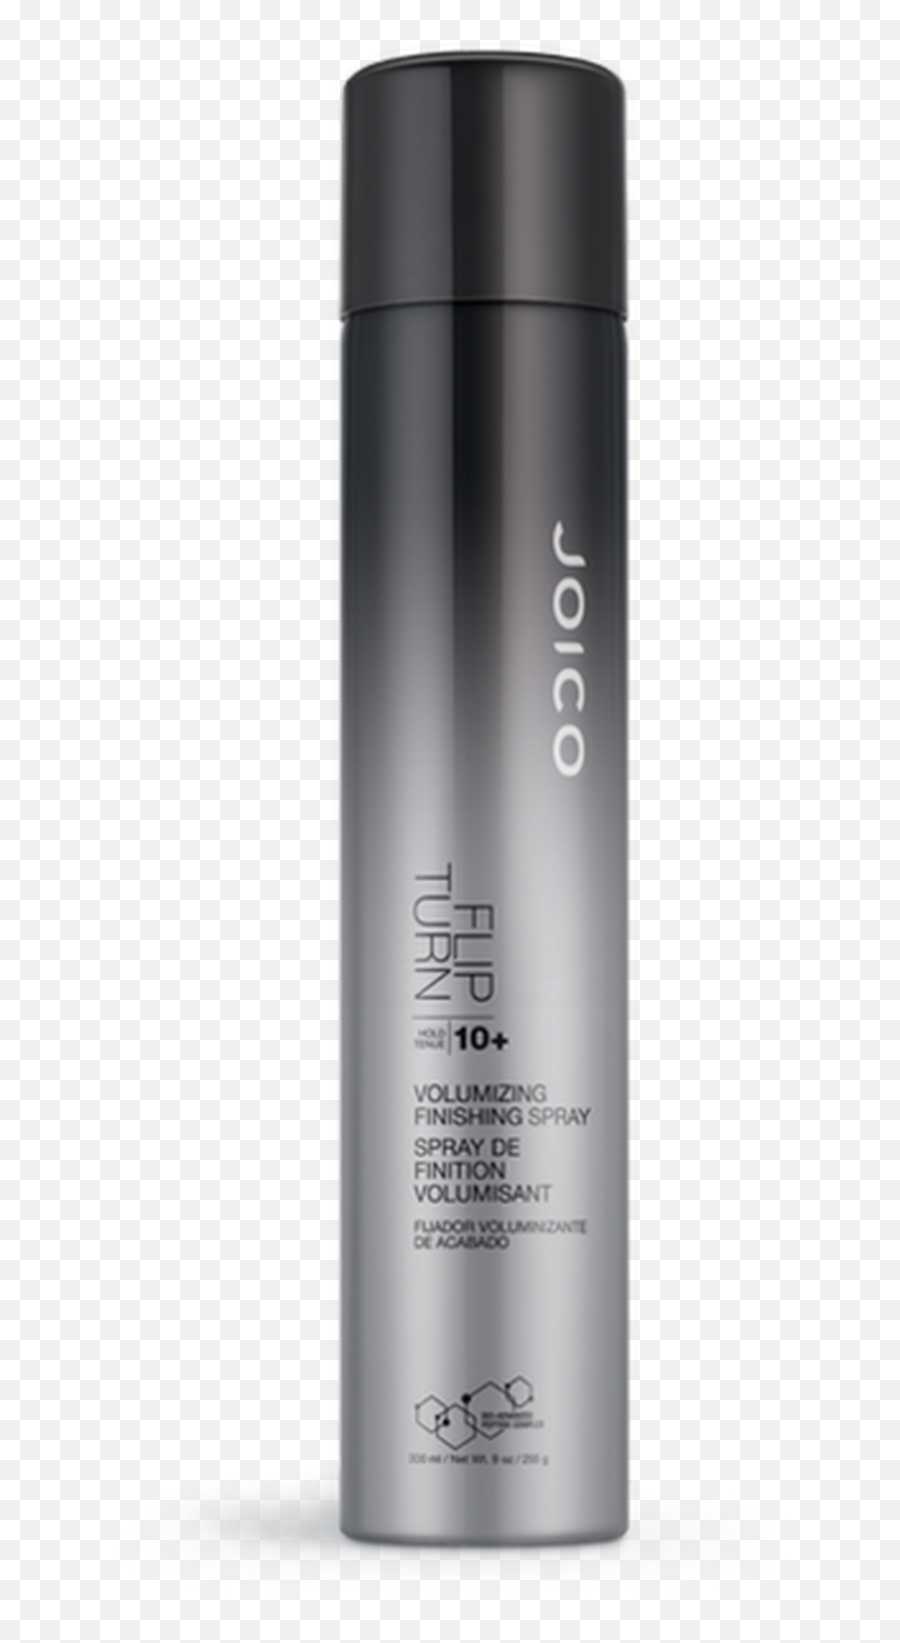 2014s Most Innovative Beauty Products - Joico Flip Turn Volumizing Finishing Spray Emoji,Flipping Hair Emoji